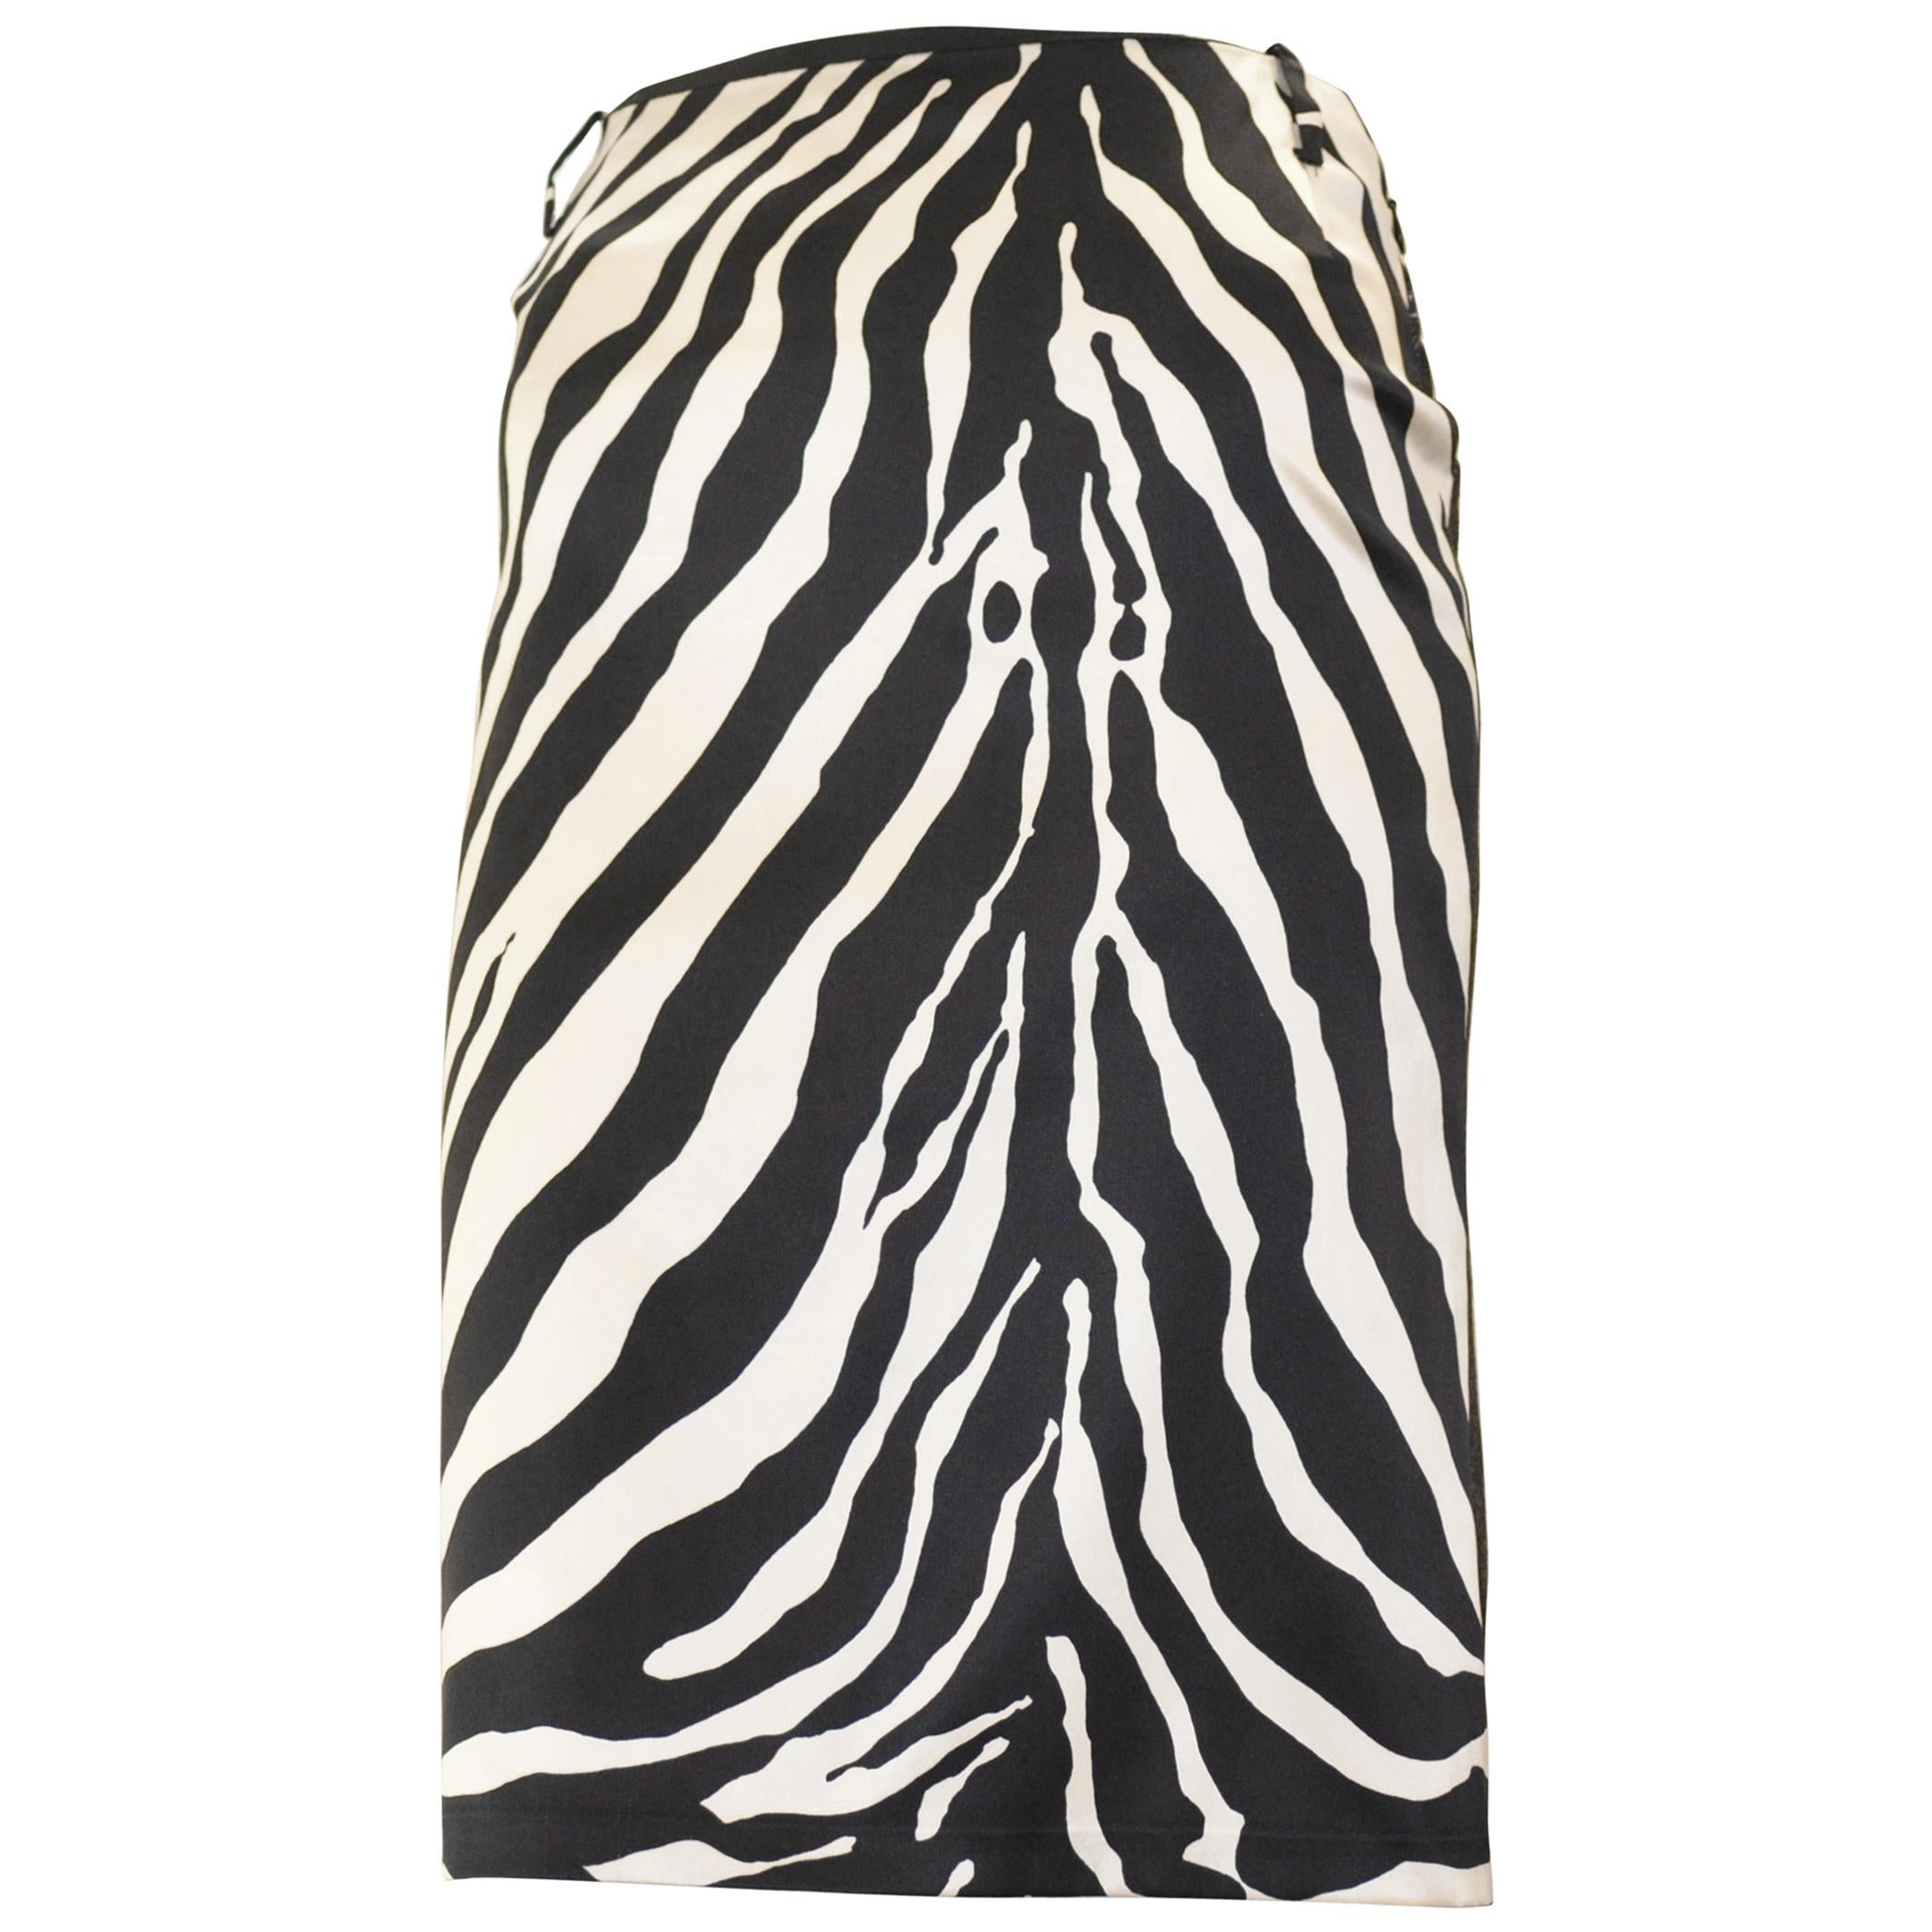 Dolce & Gabbana Zebra print front Jean Skirt back